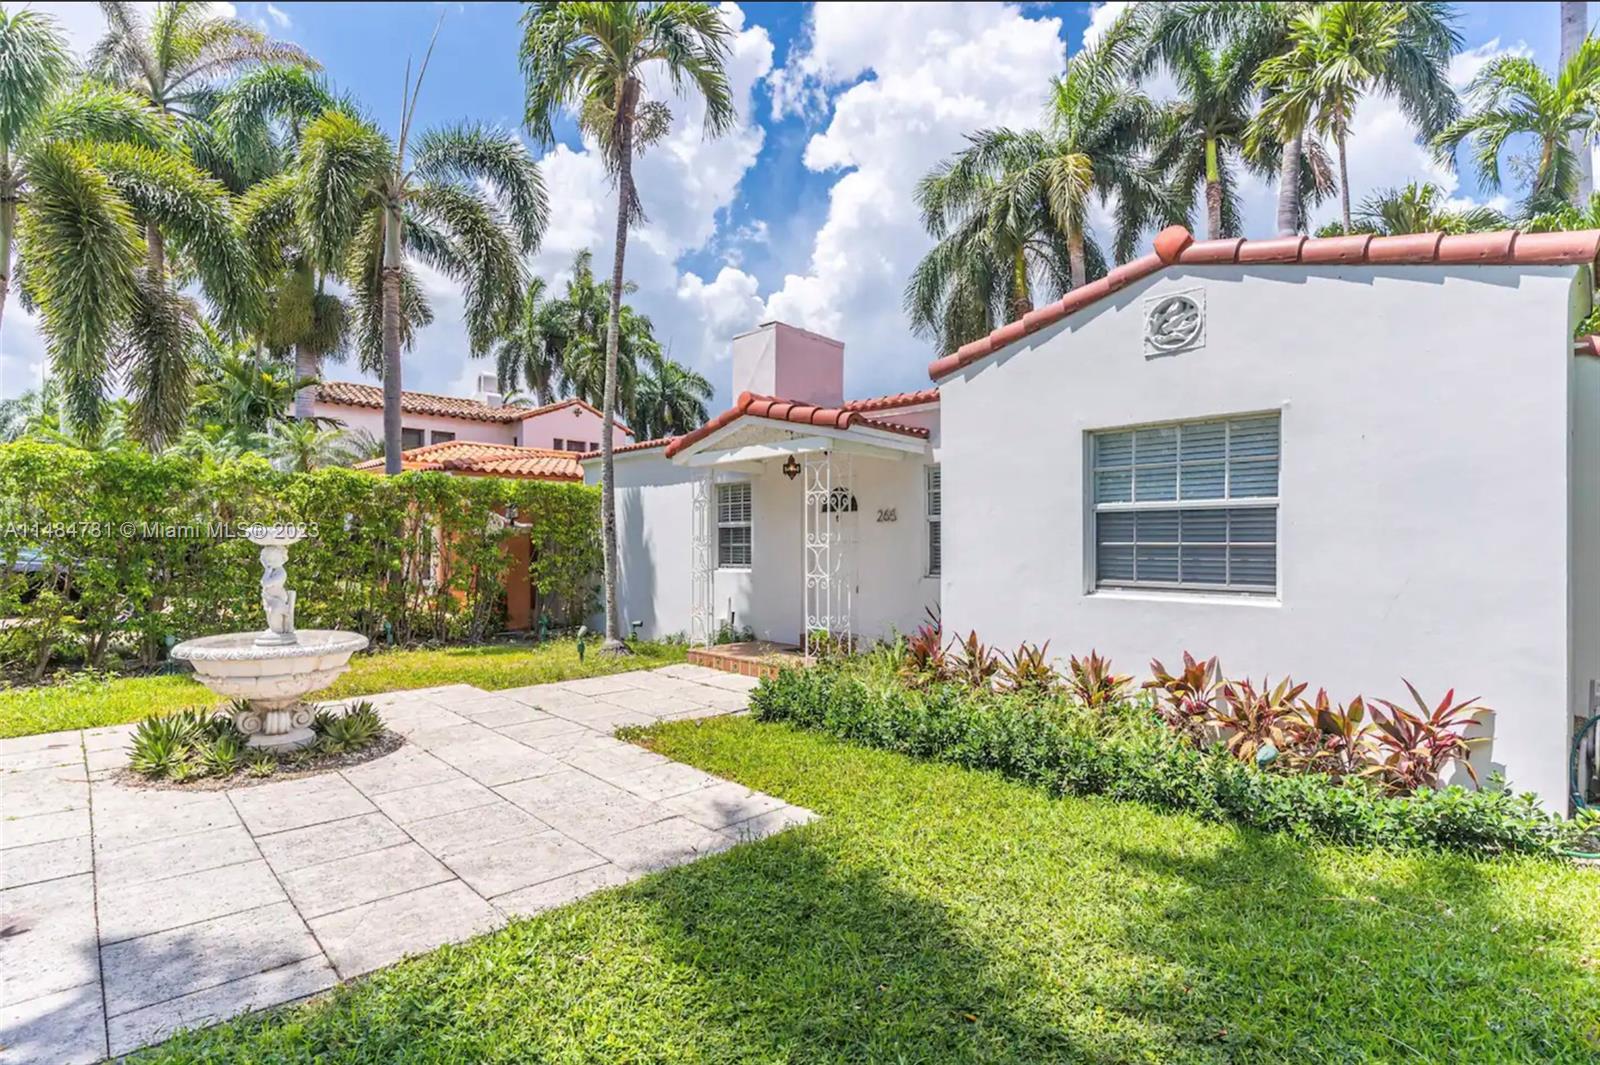 Rental Property at 265 Palm Ave, Miami Beach, Miami-Dade County, Florida - Bedrooms: 4 
Bathrooms: 3  - $8,000 MO.